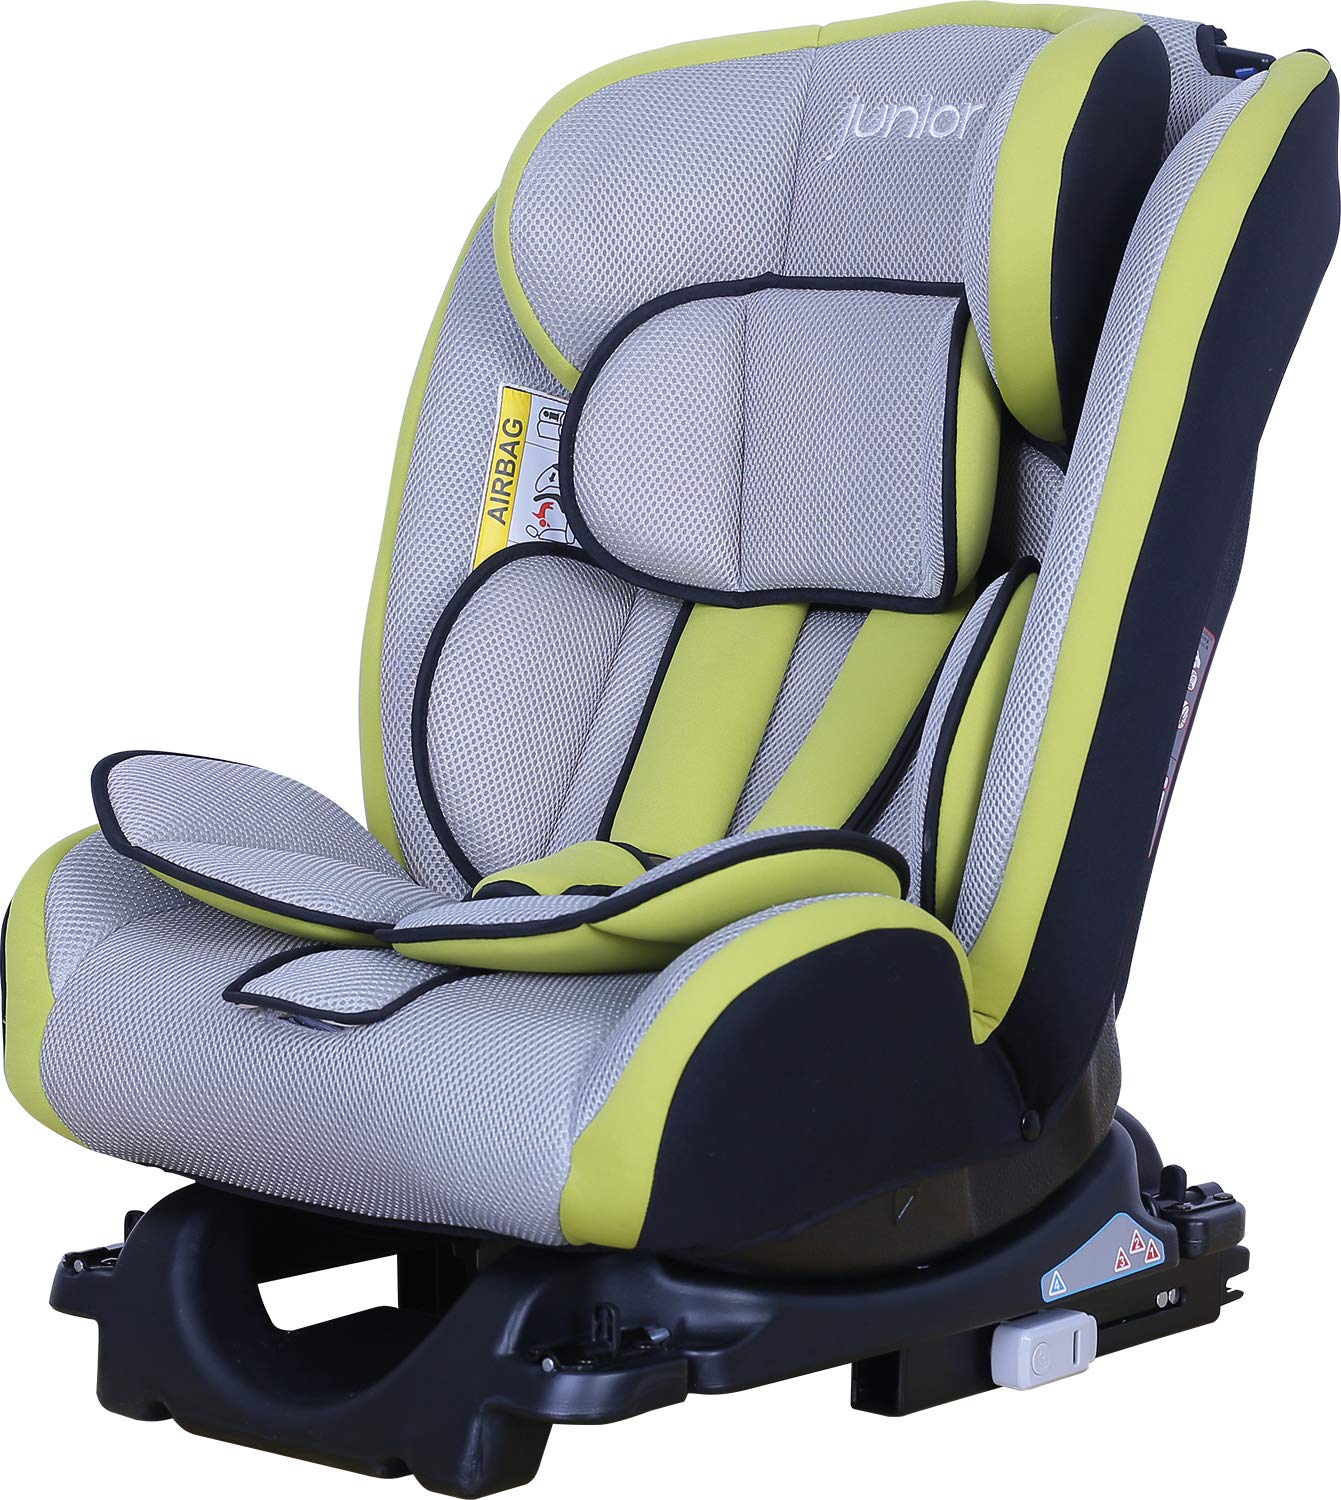 PETEX Kindersitz Supreme Plus - Gruppe 0 1 2 3 nach ECE R44/04 - Isofix